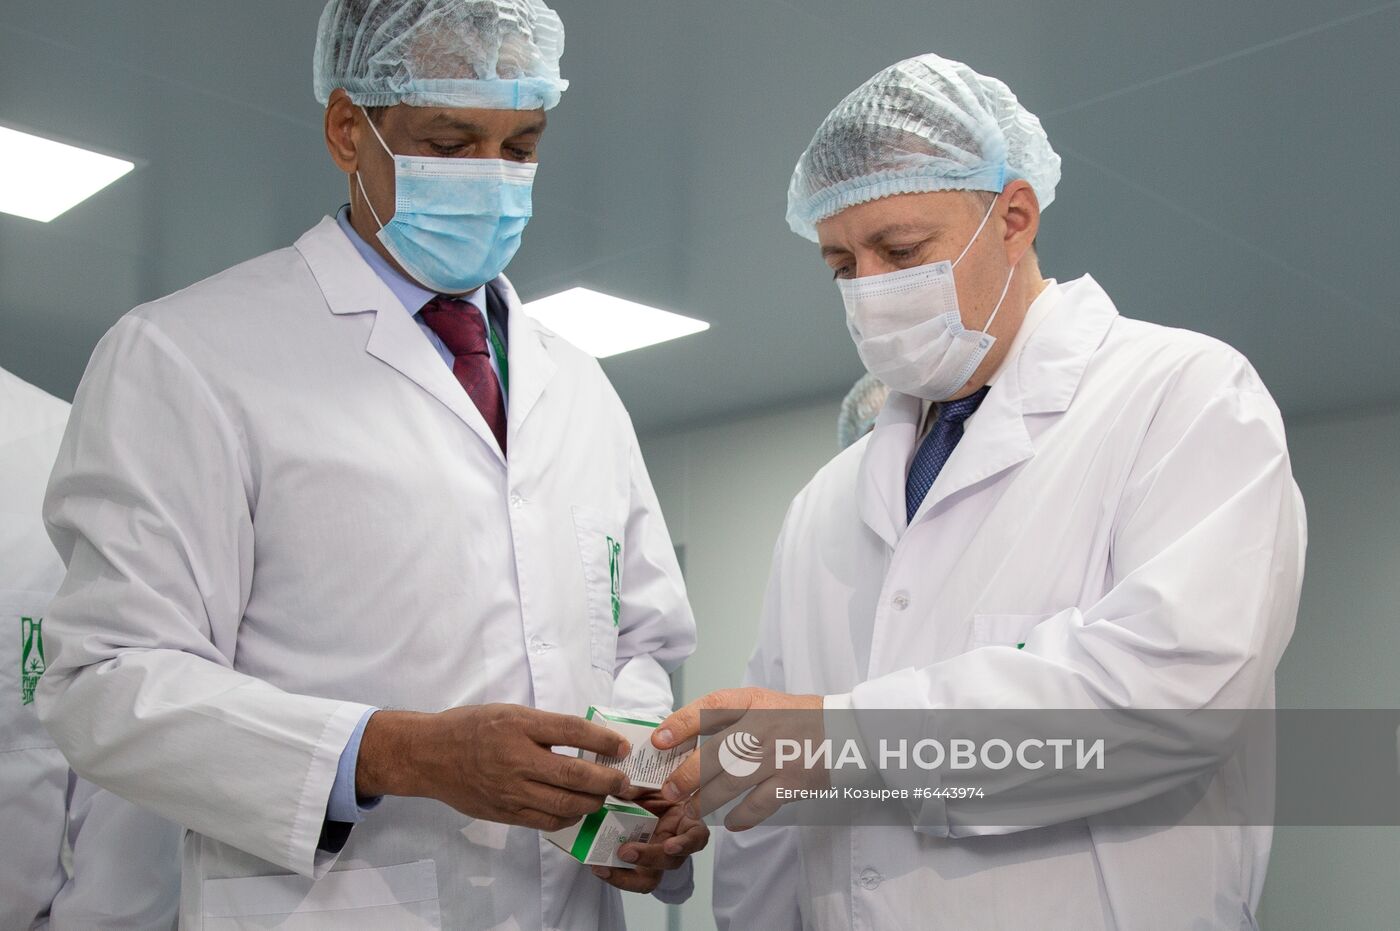 Выпуск препарата для борьбы с COVID-19 на Иркутском заводе "Фармасинтез"